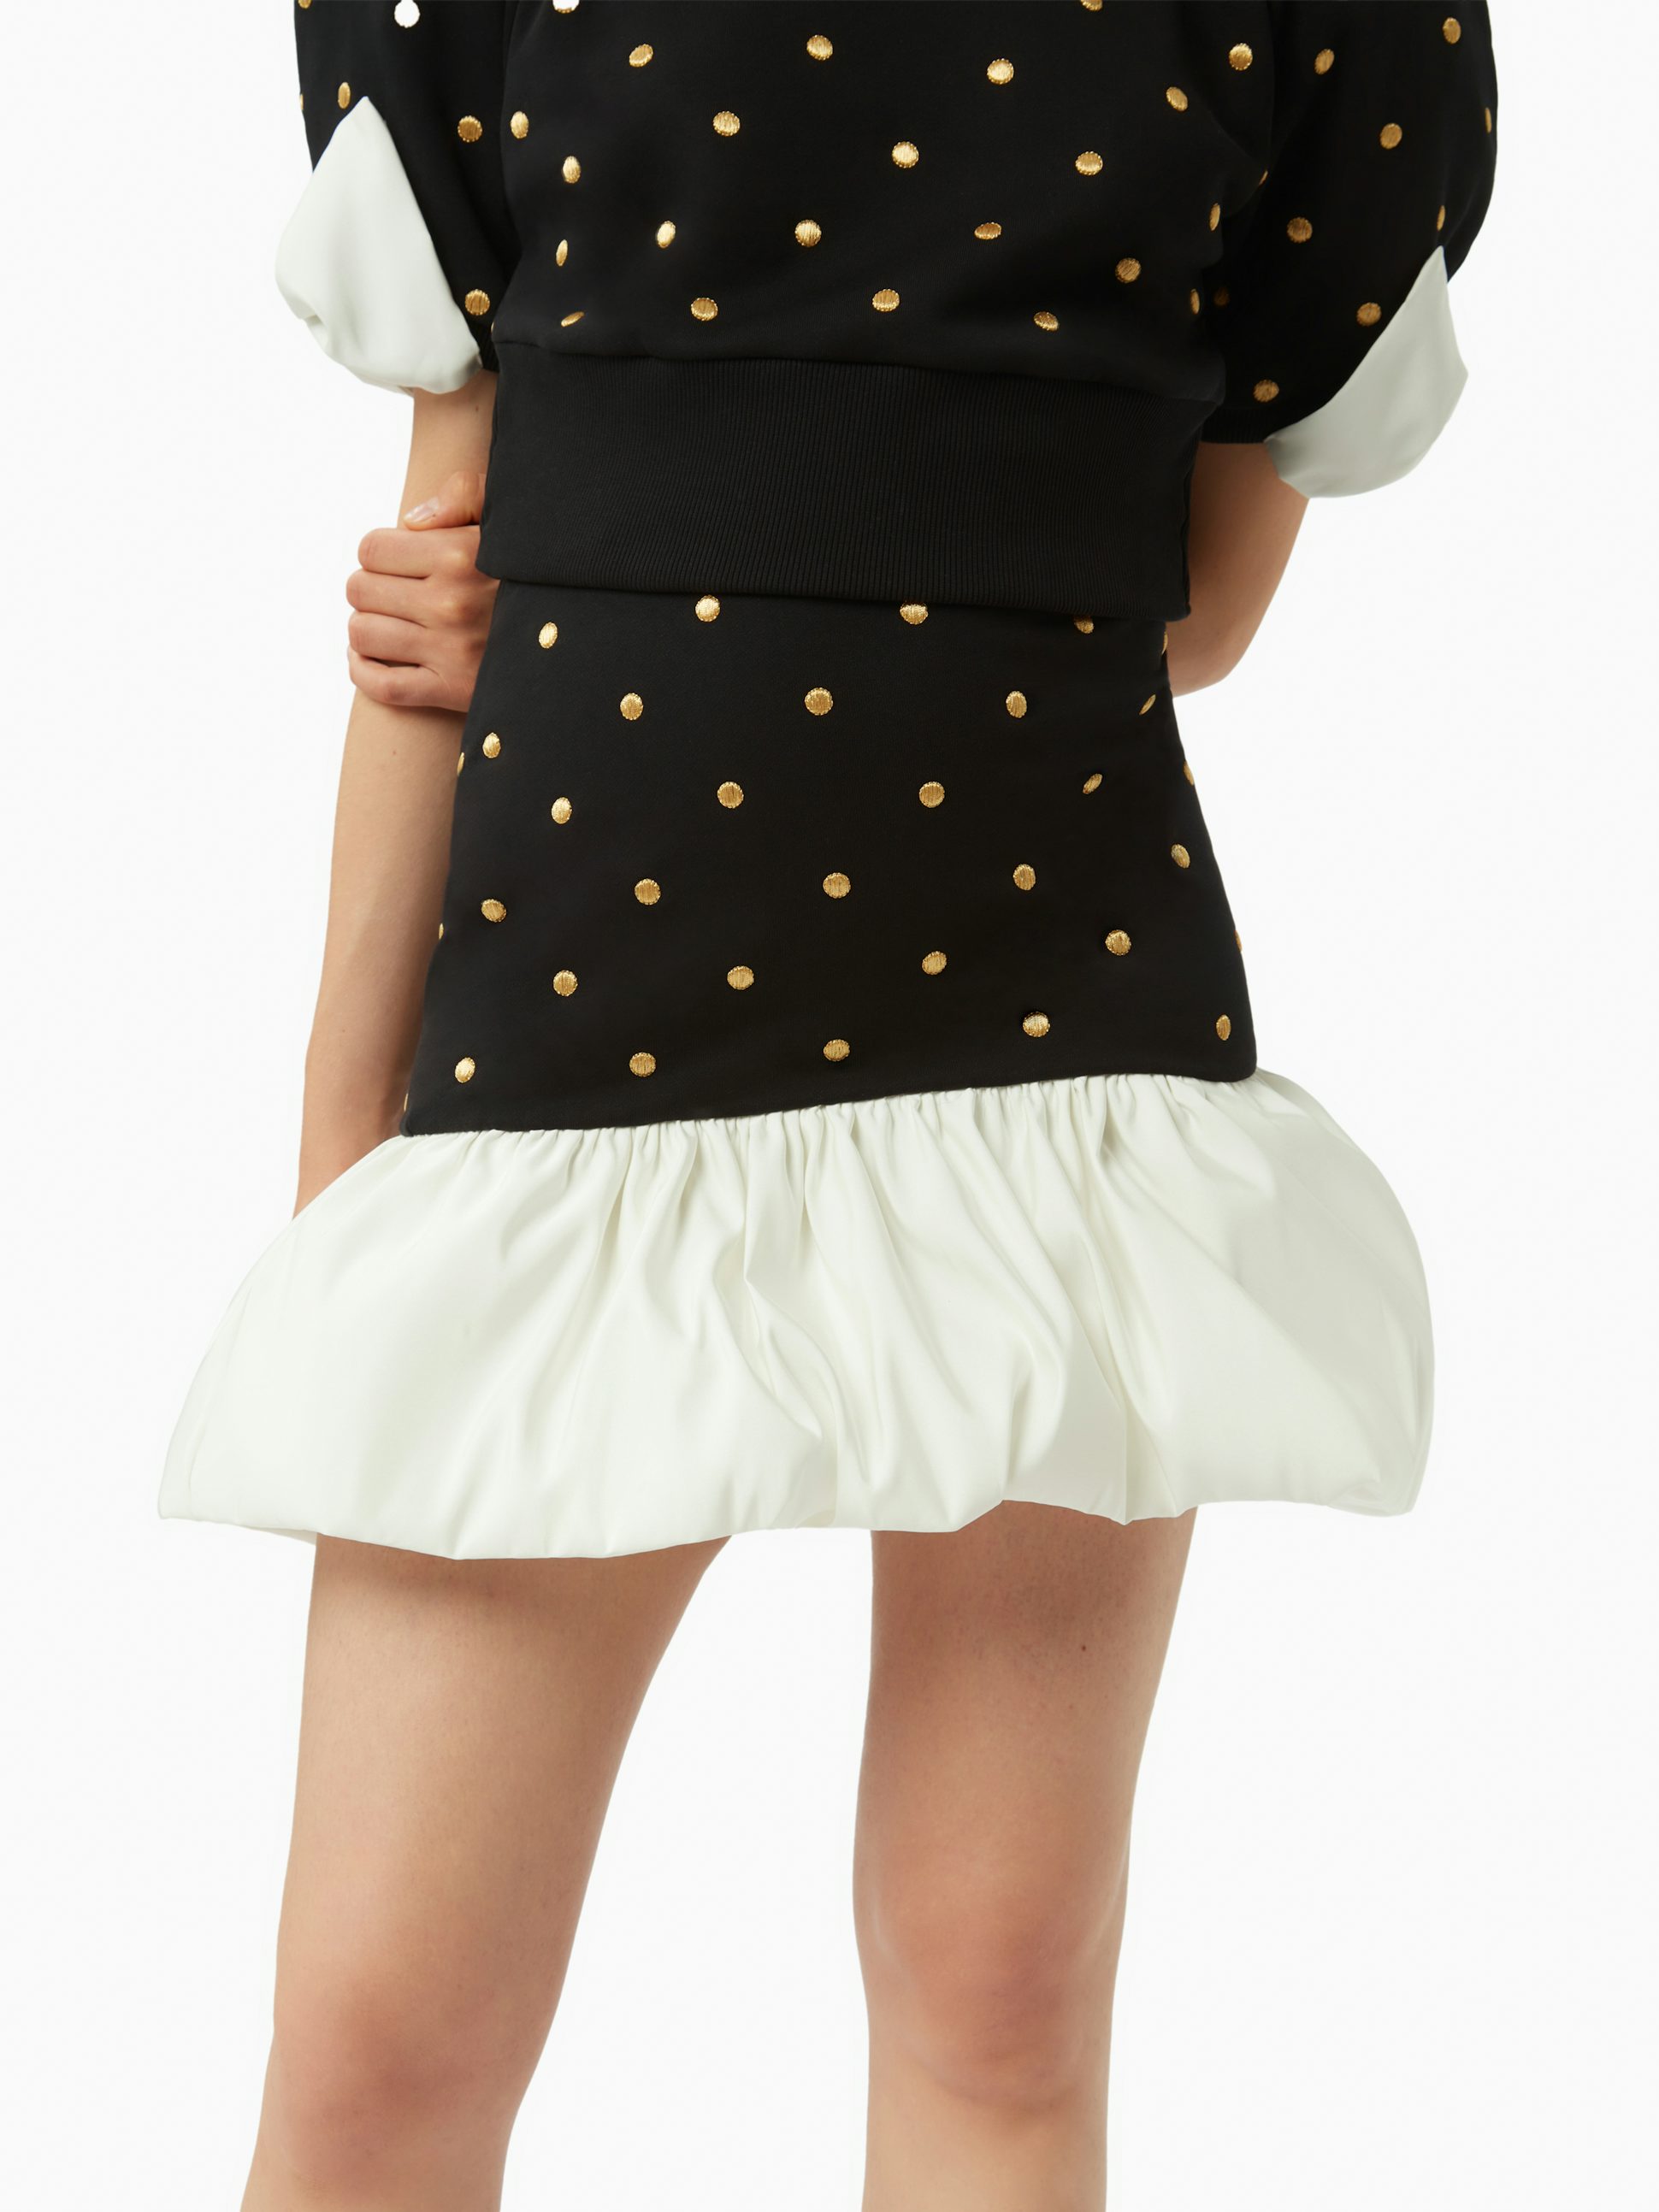 Polka dot peplum skirt in black - Nina Ricci